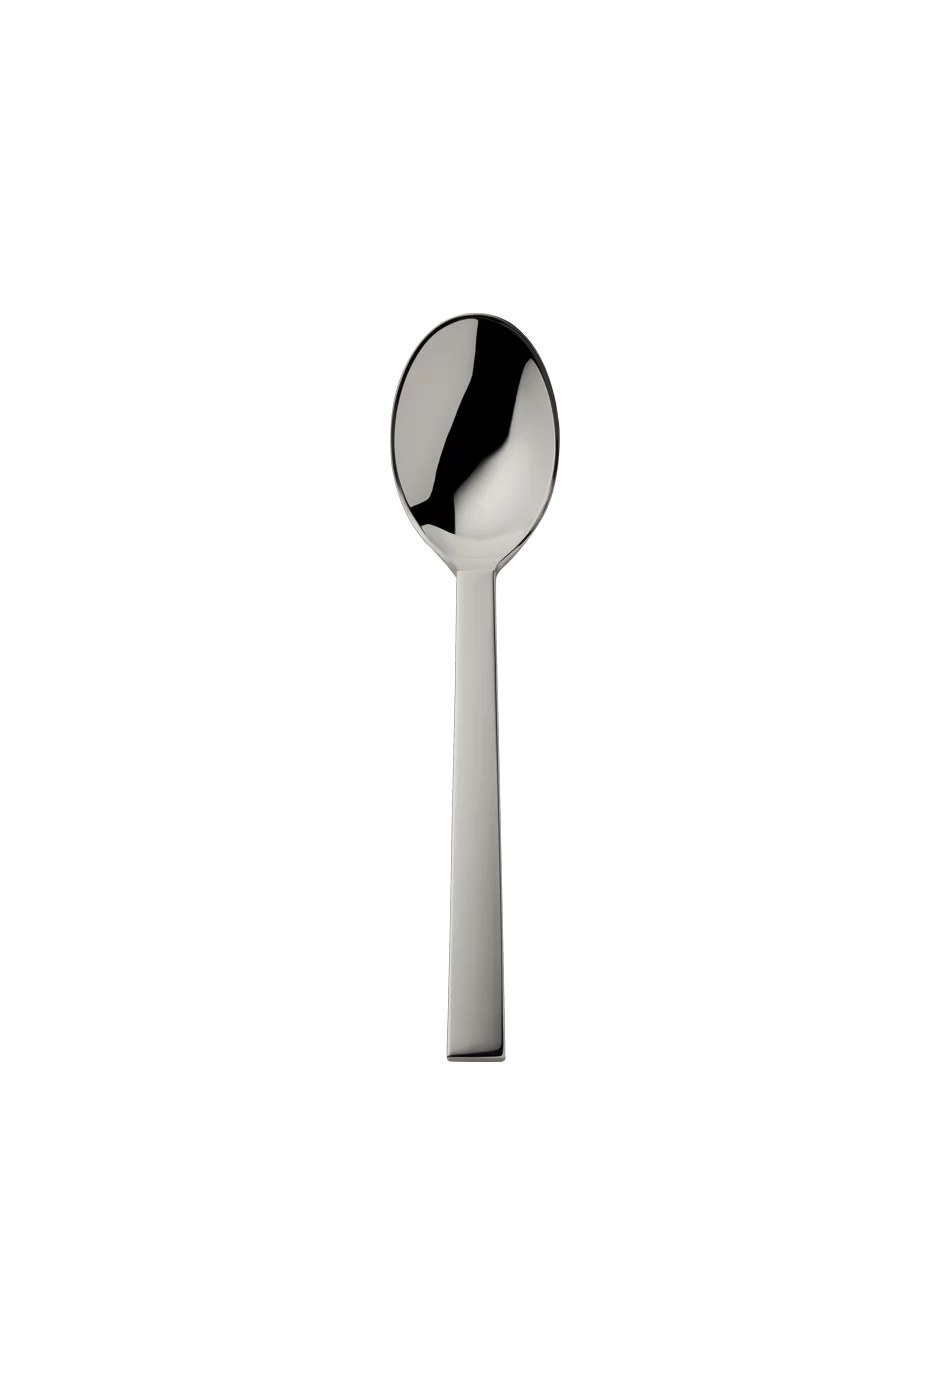 Sphinx Cream Spoon (Broth Spoon) (925 Sterling Silver)